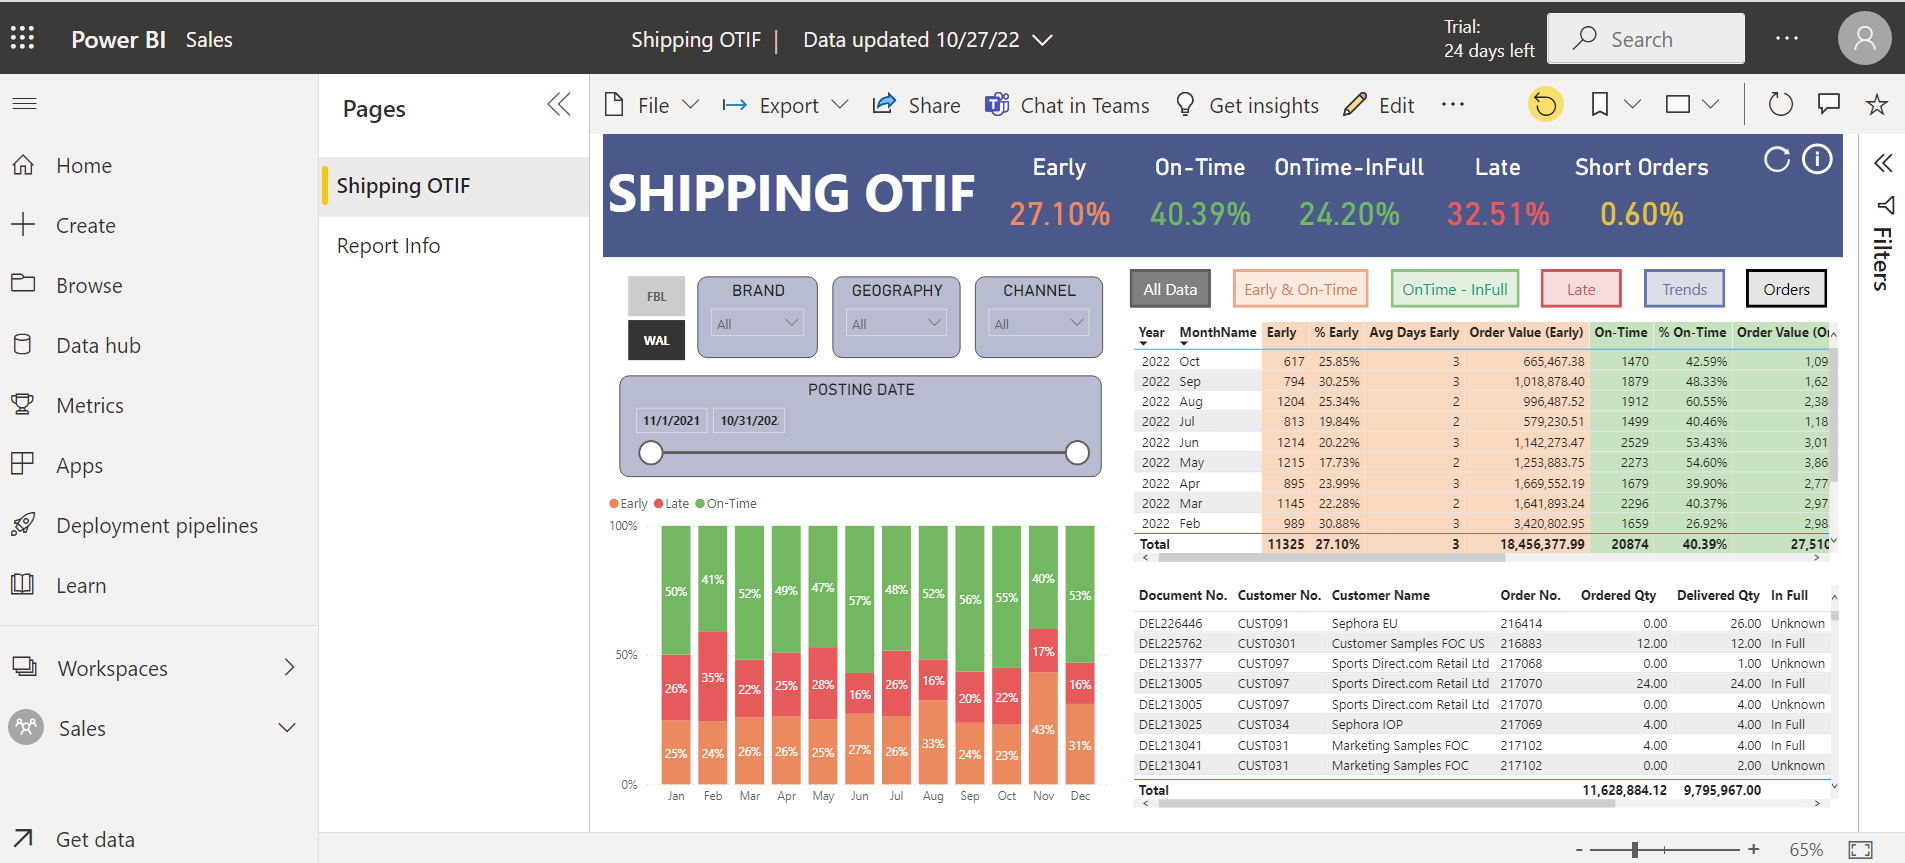 Shipping OTIF Report